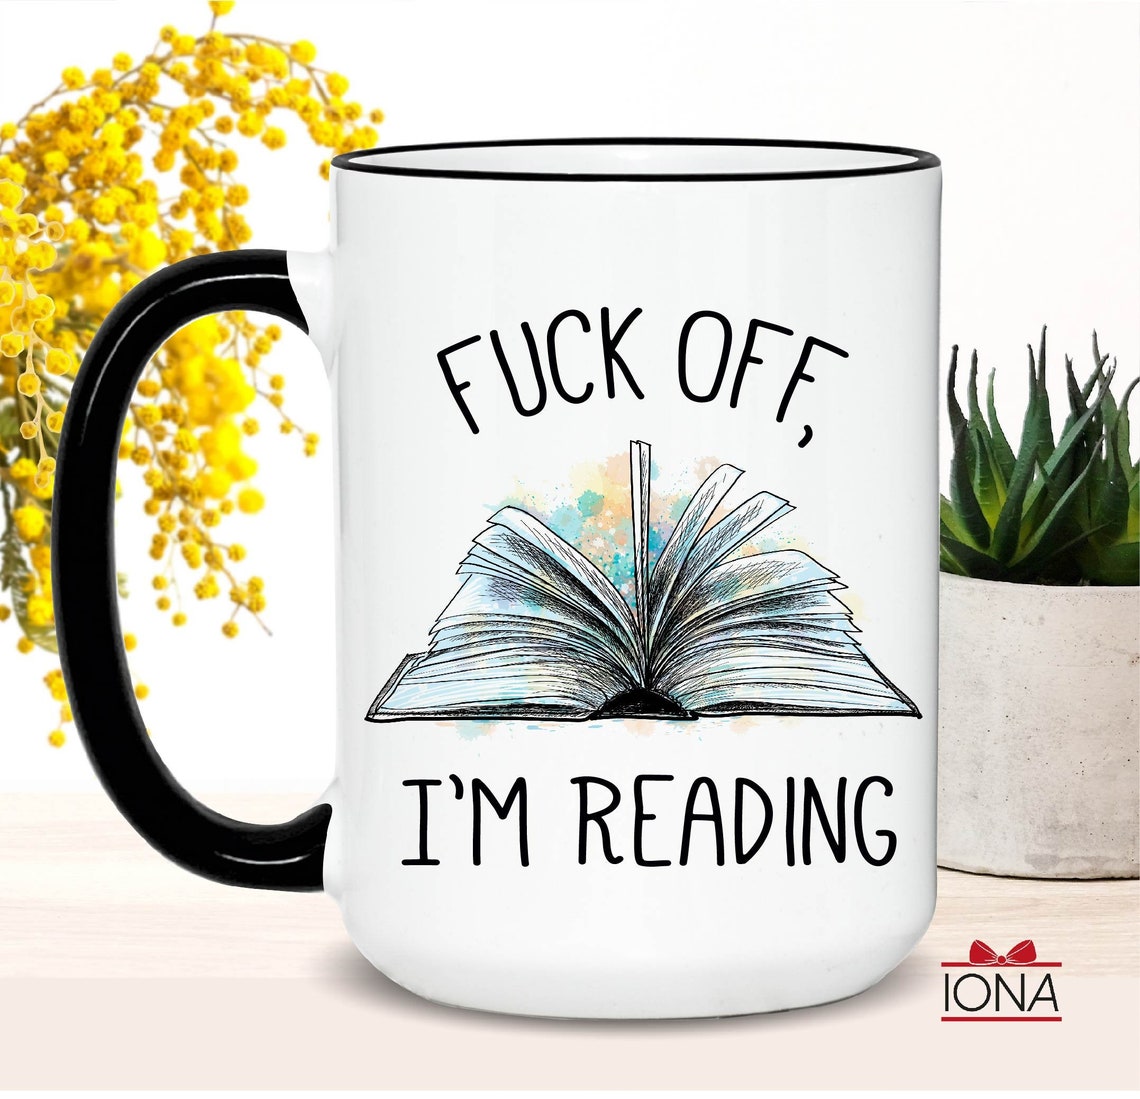 Fck Off I’m Reading Coffee Mug - Funny Coffee Mug Gift for Book Lover, Bookworm, Book Club